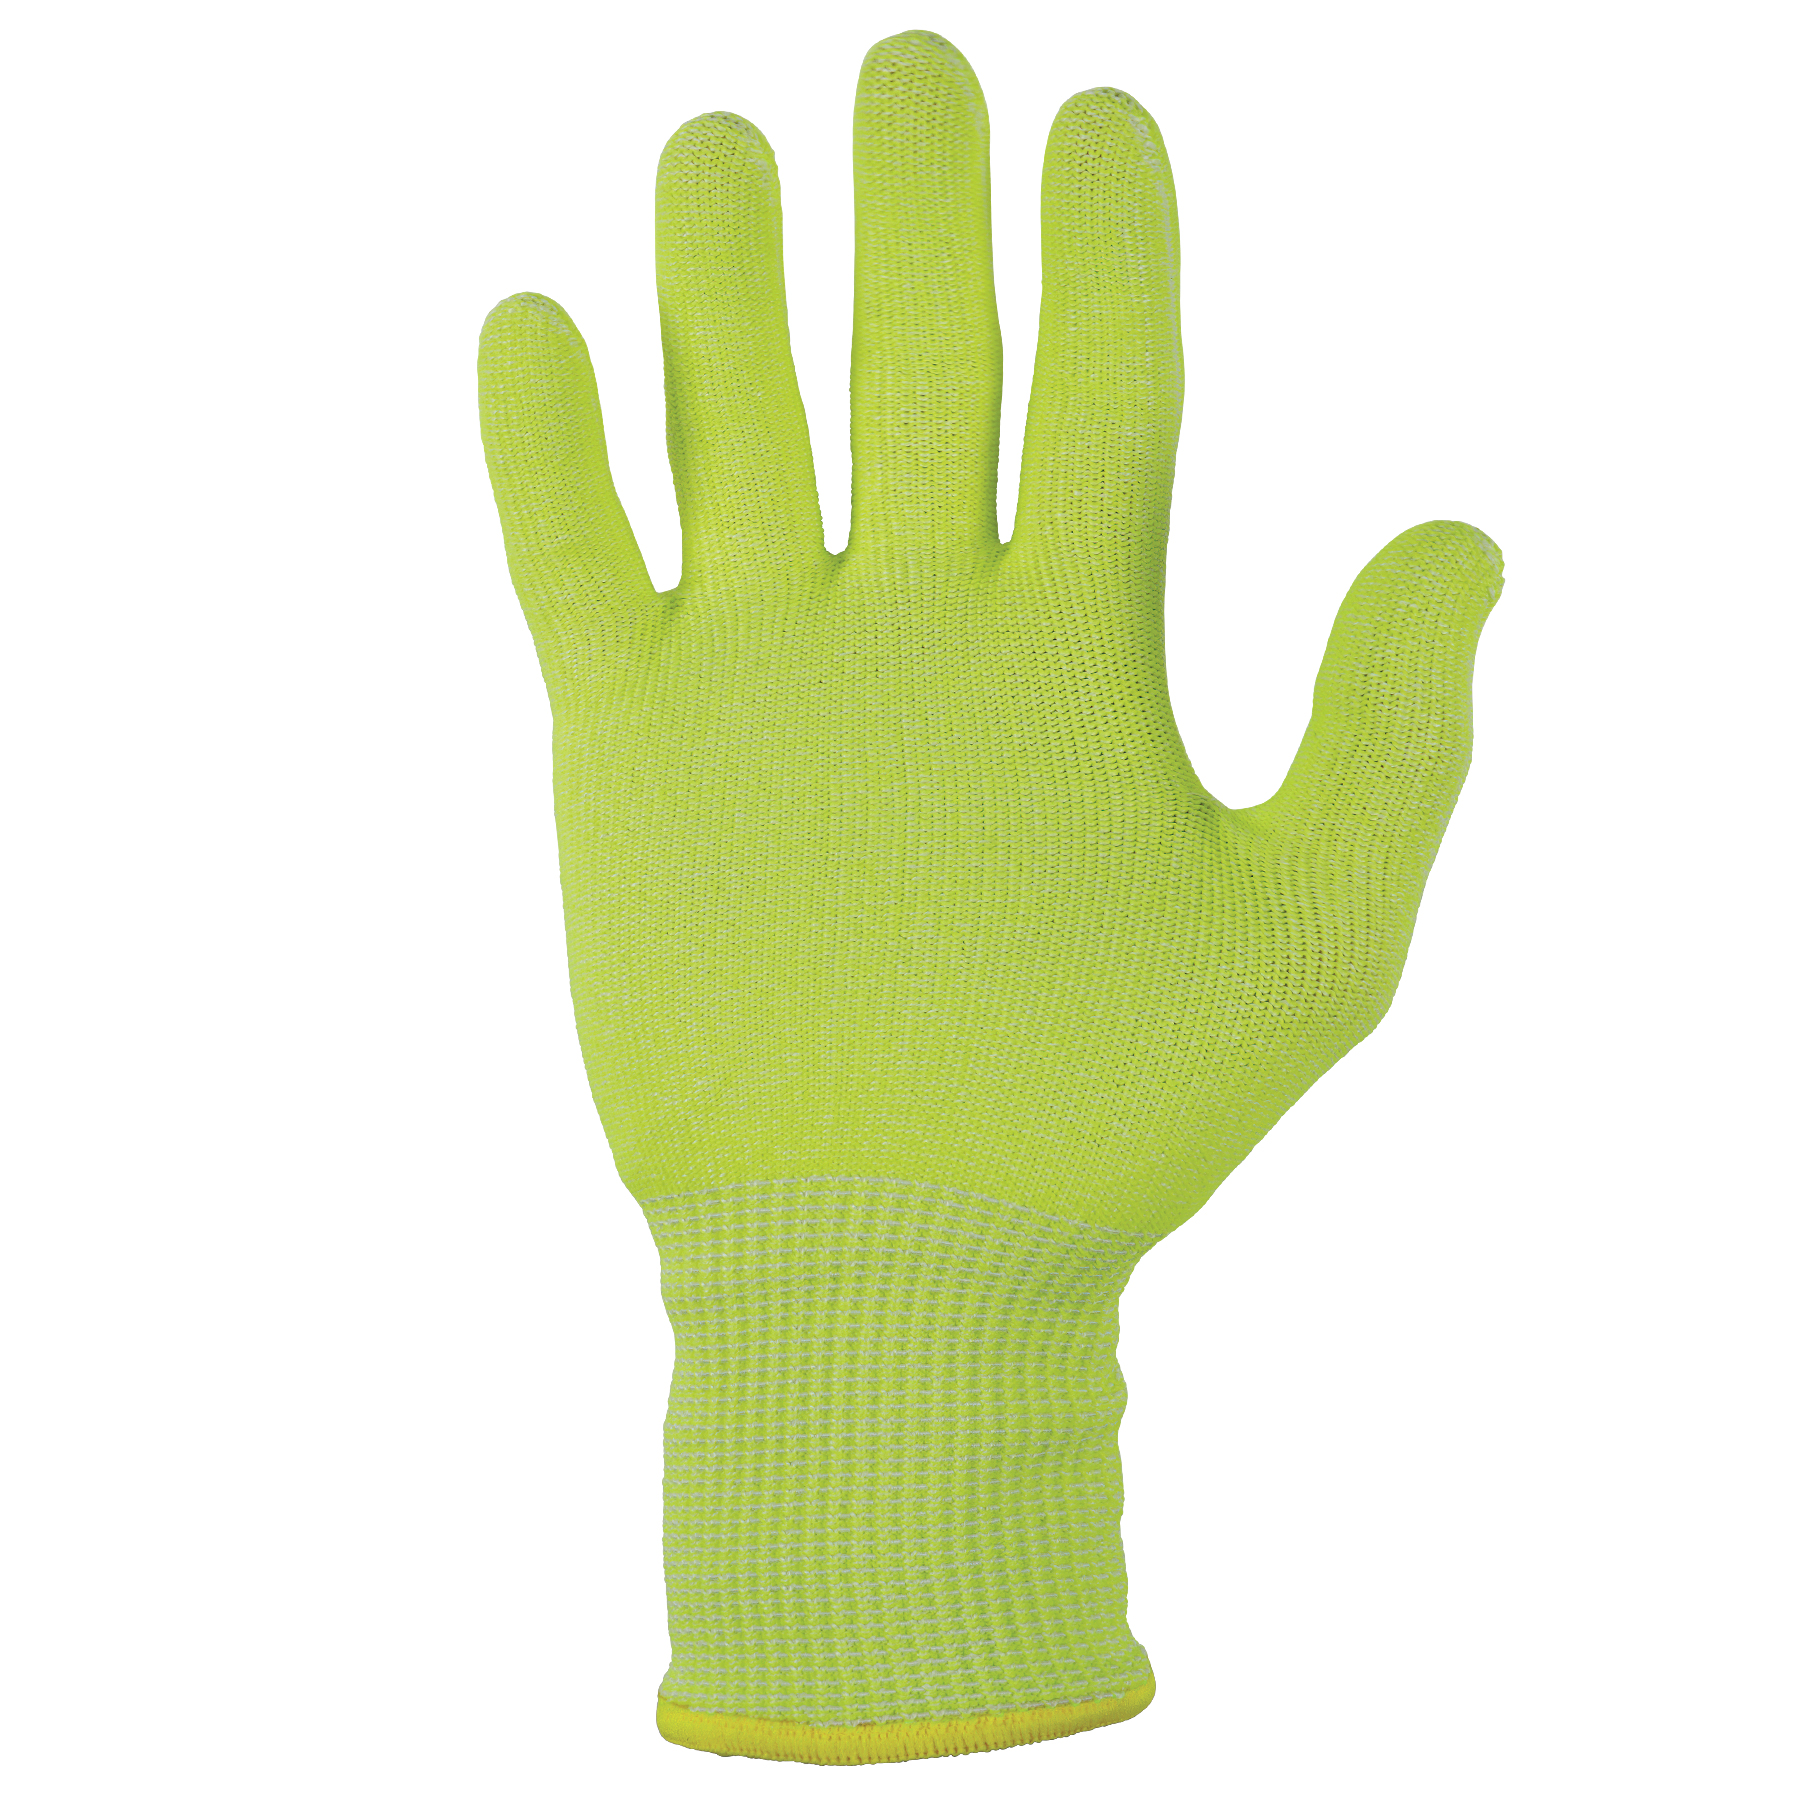 https://www.ergodyne.com/sites/default/files/product-images/18012-7040-cut-resistant-food-grade-gloves-palm_0.jpg